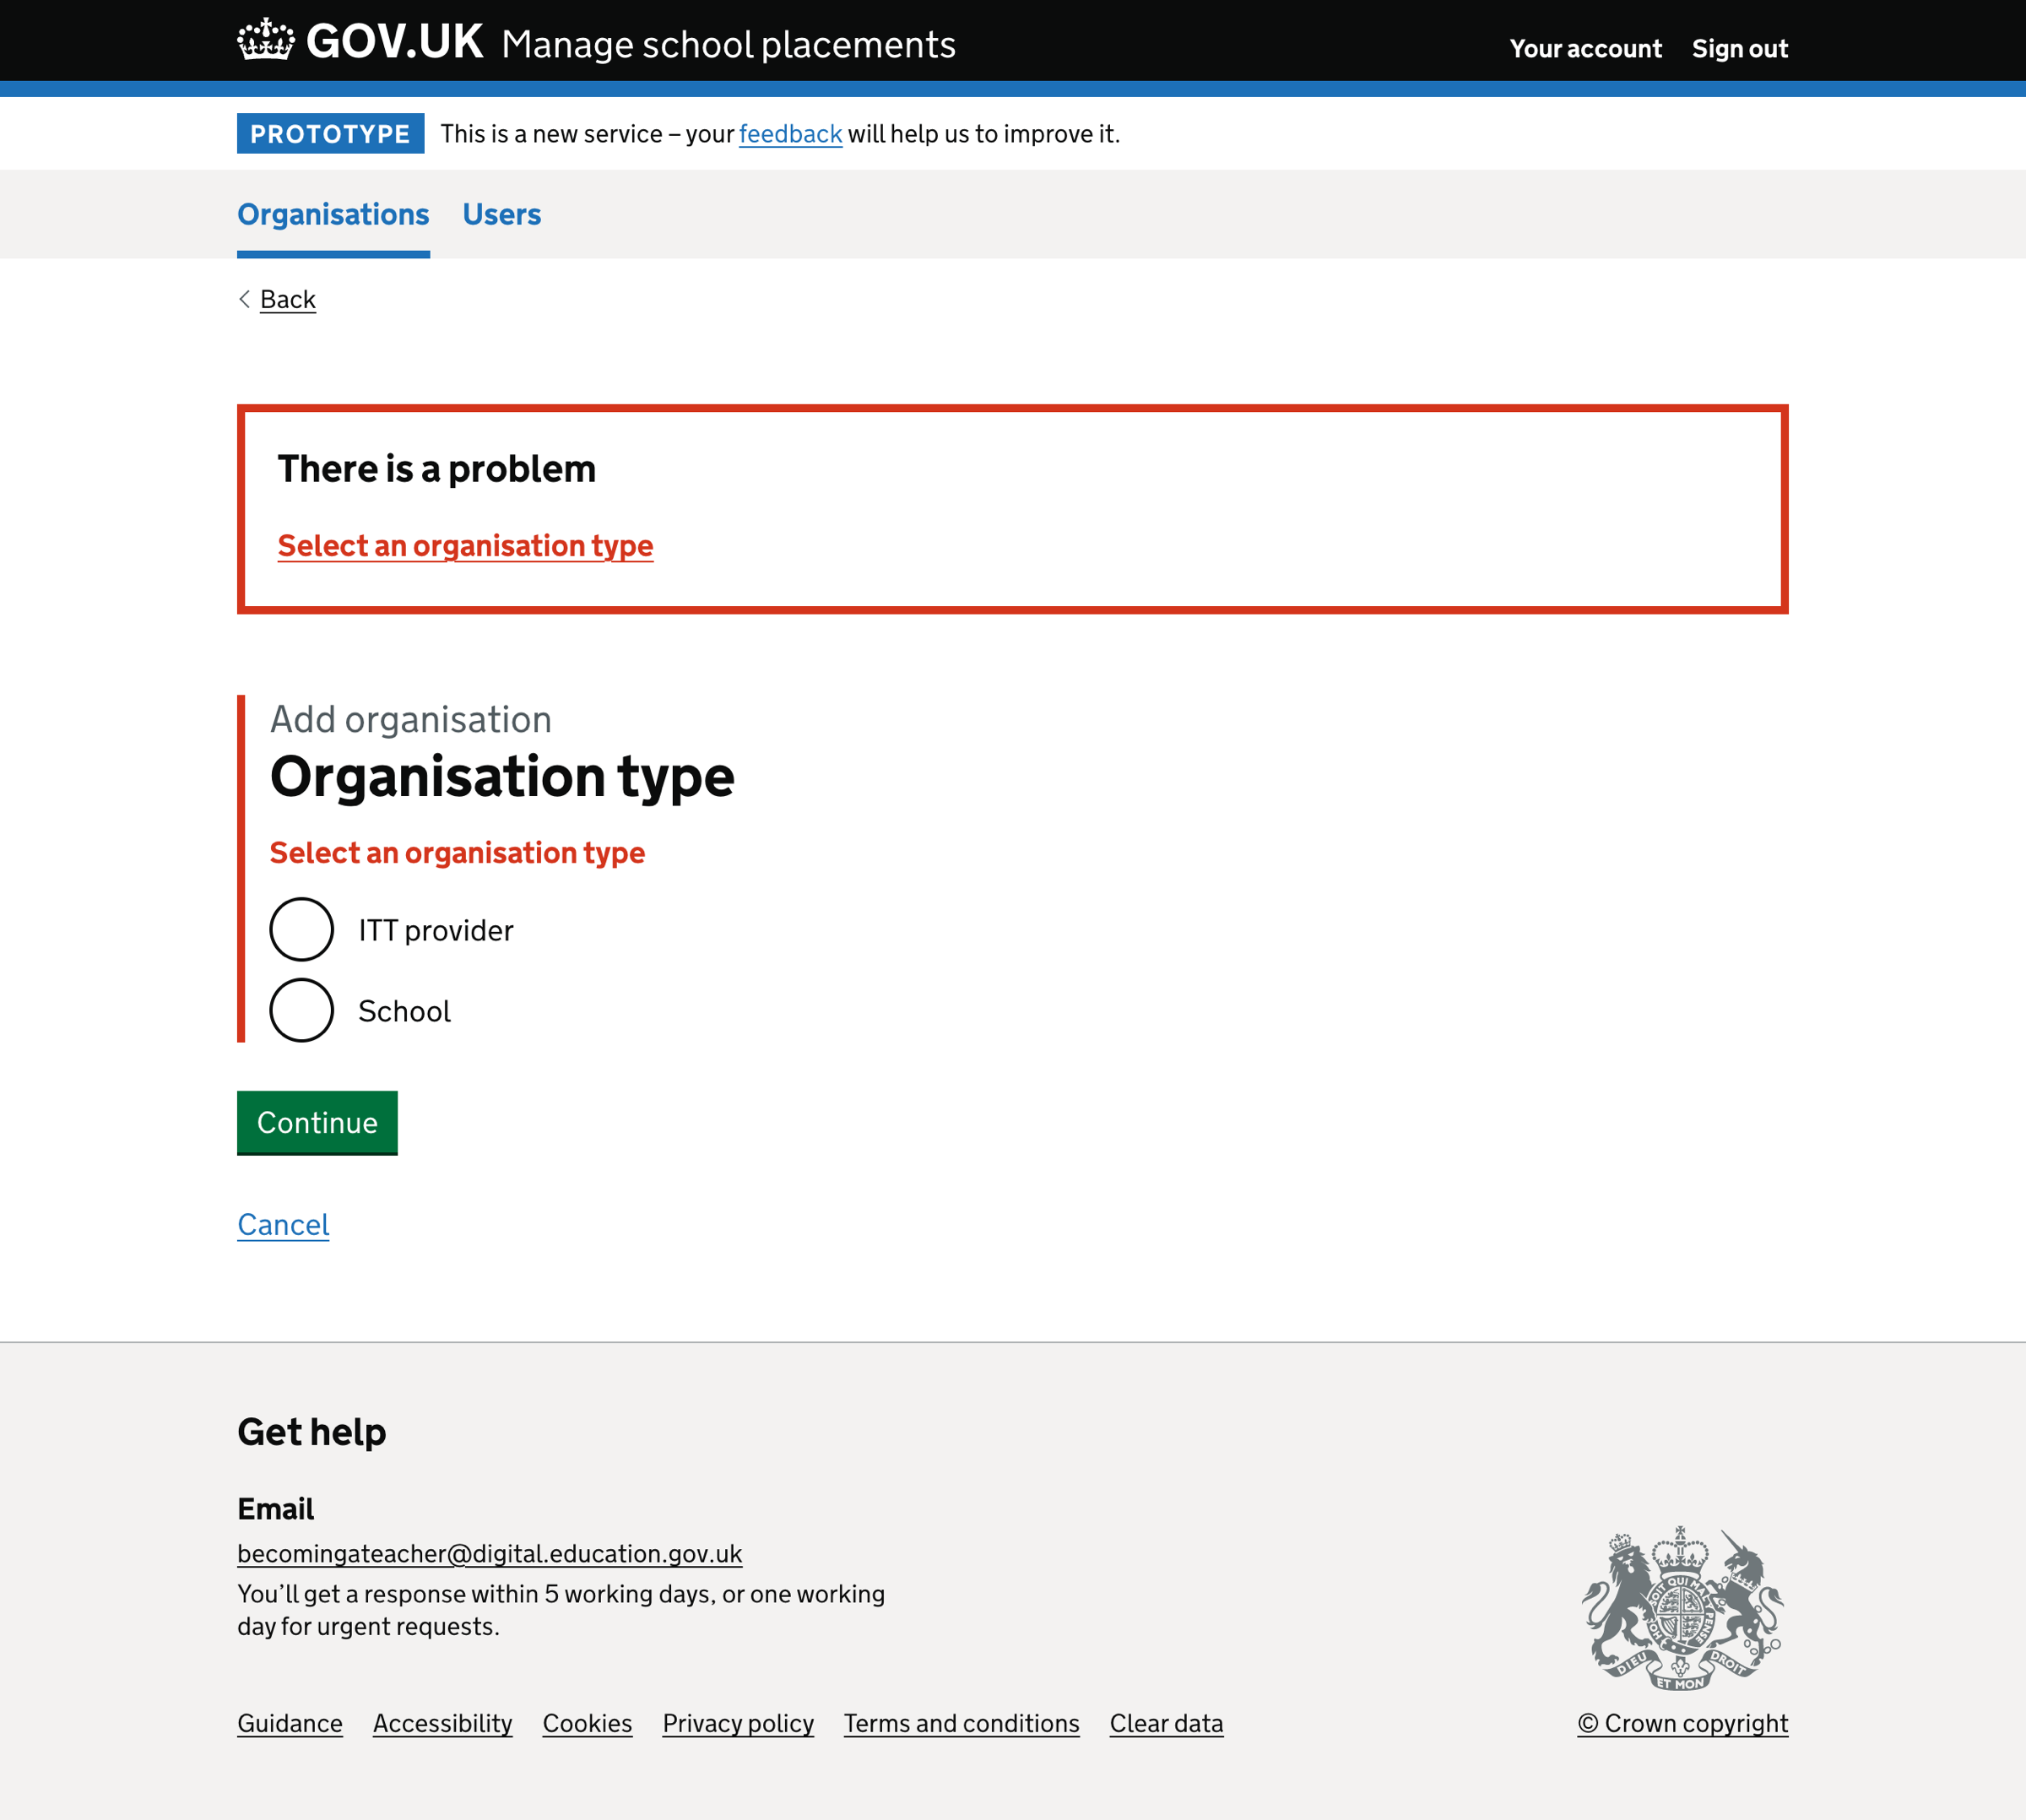 Screenshot of Add organisation - Organisation type error